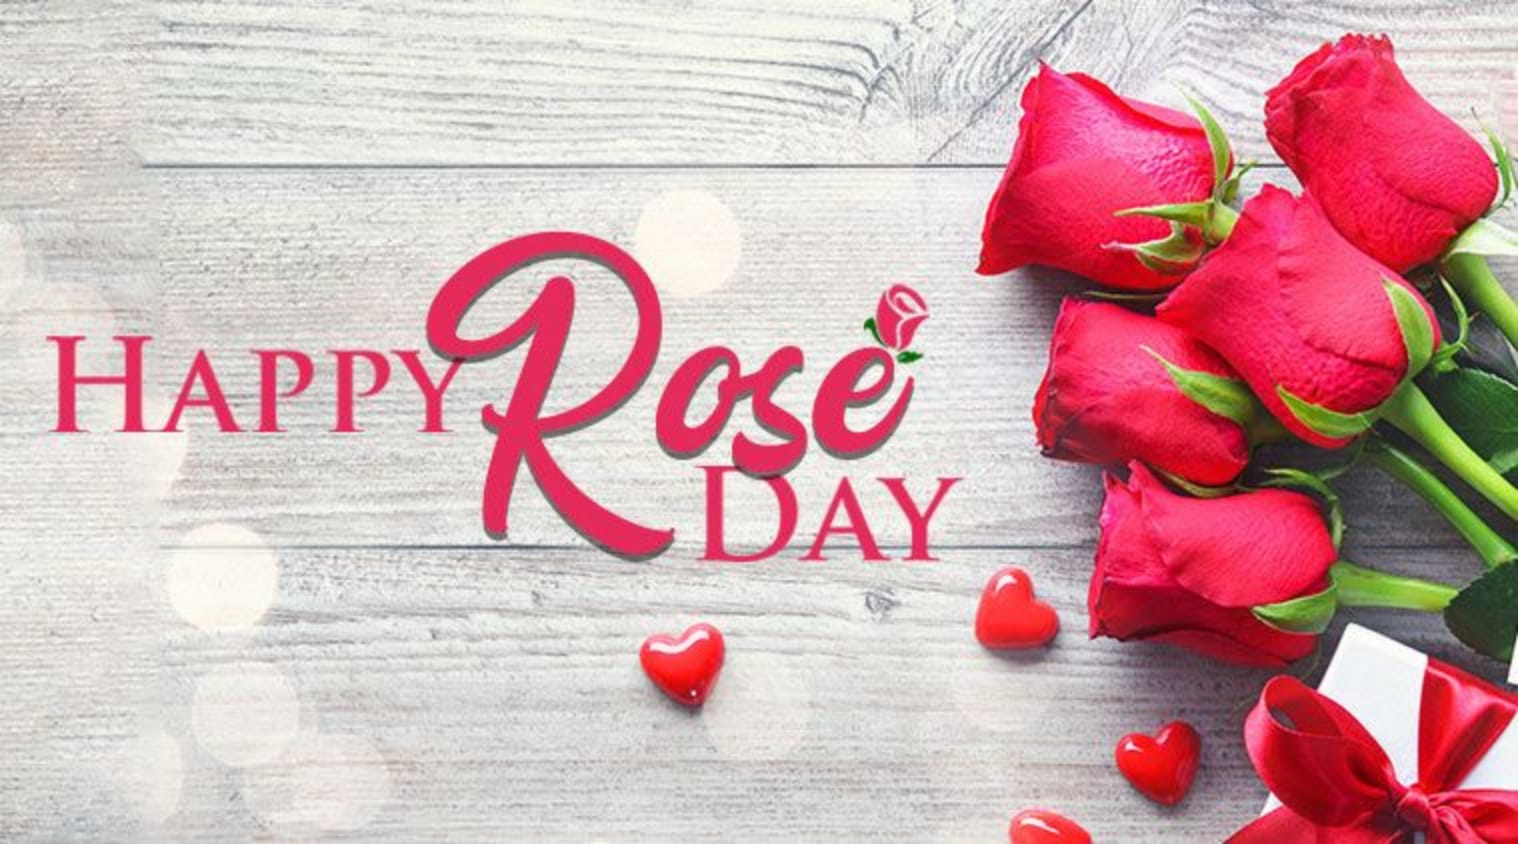 rose day 2022 image download